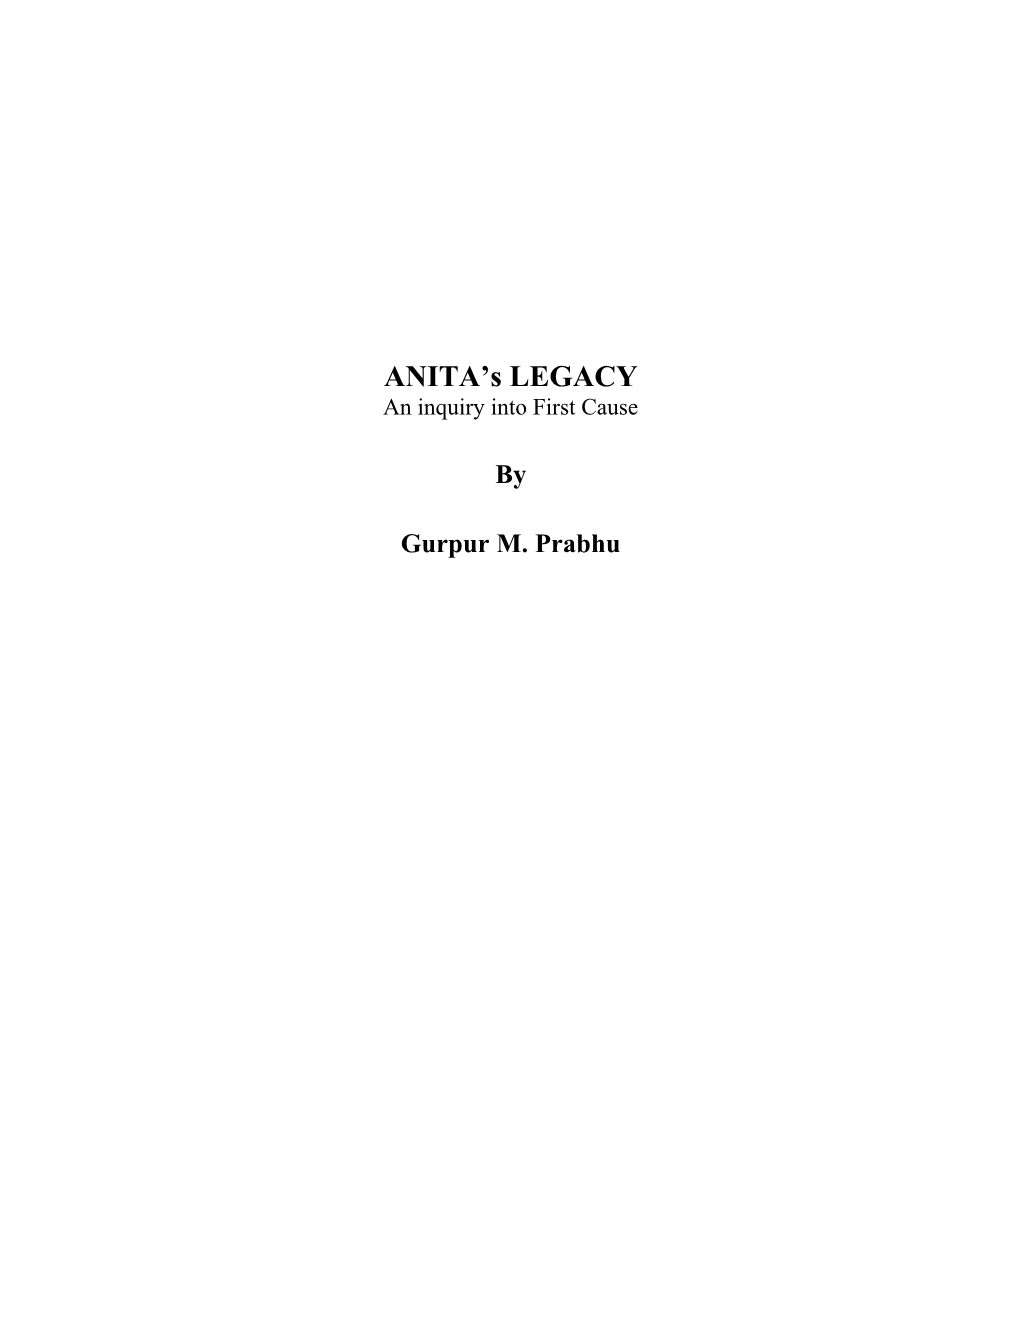 Anita's Legacy Prologue